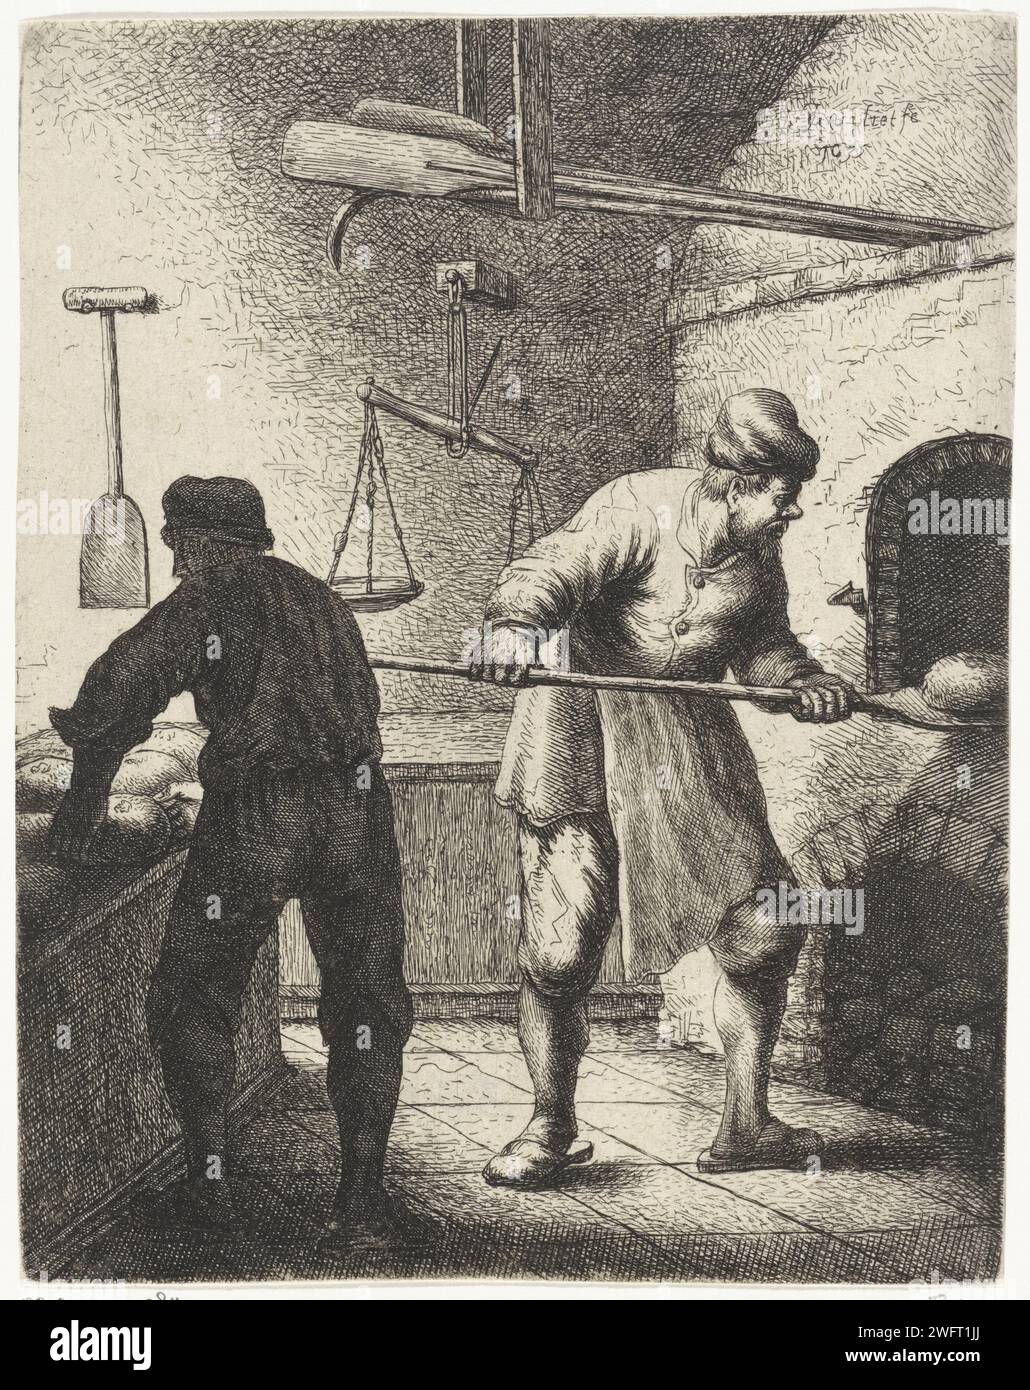 Bakker, Jan Gillisz. Van Vliet, 1635 imprimer Leiden papier gravure / gravure boulanger Banque D'Images